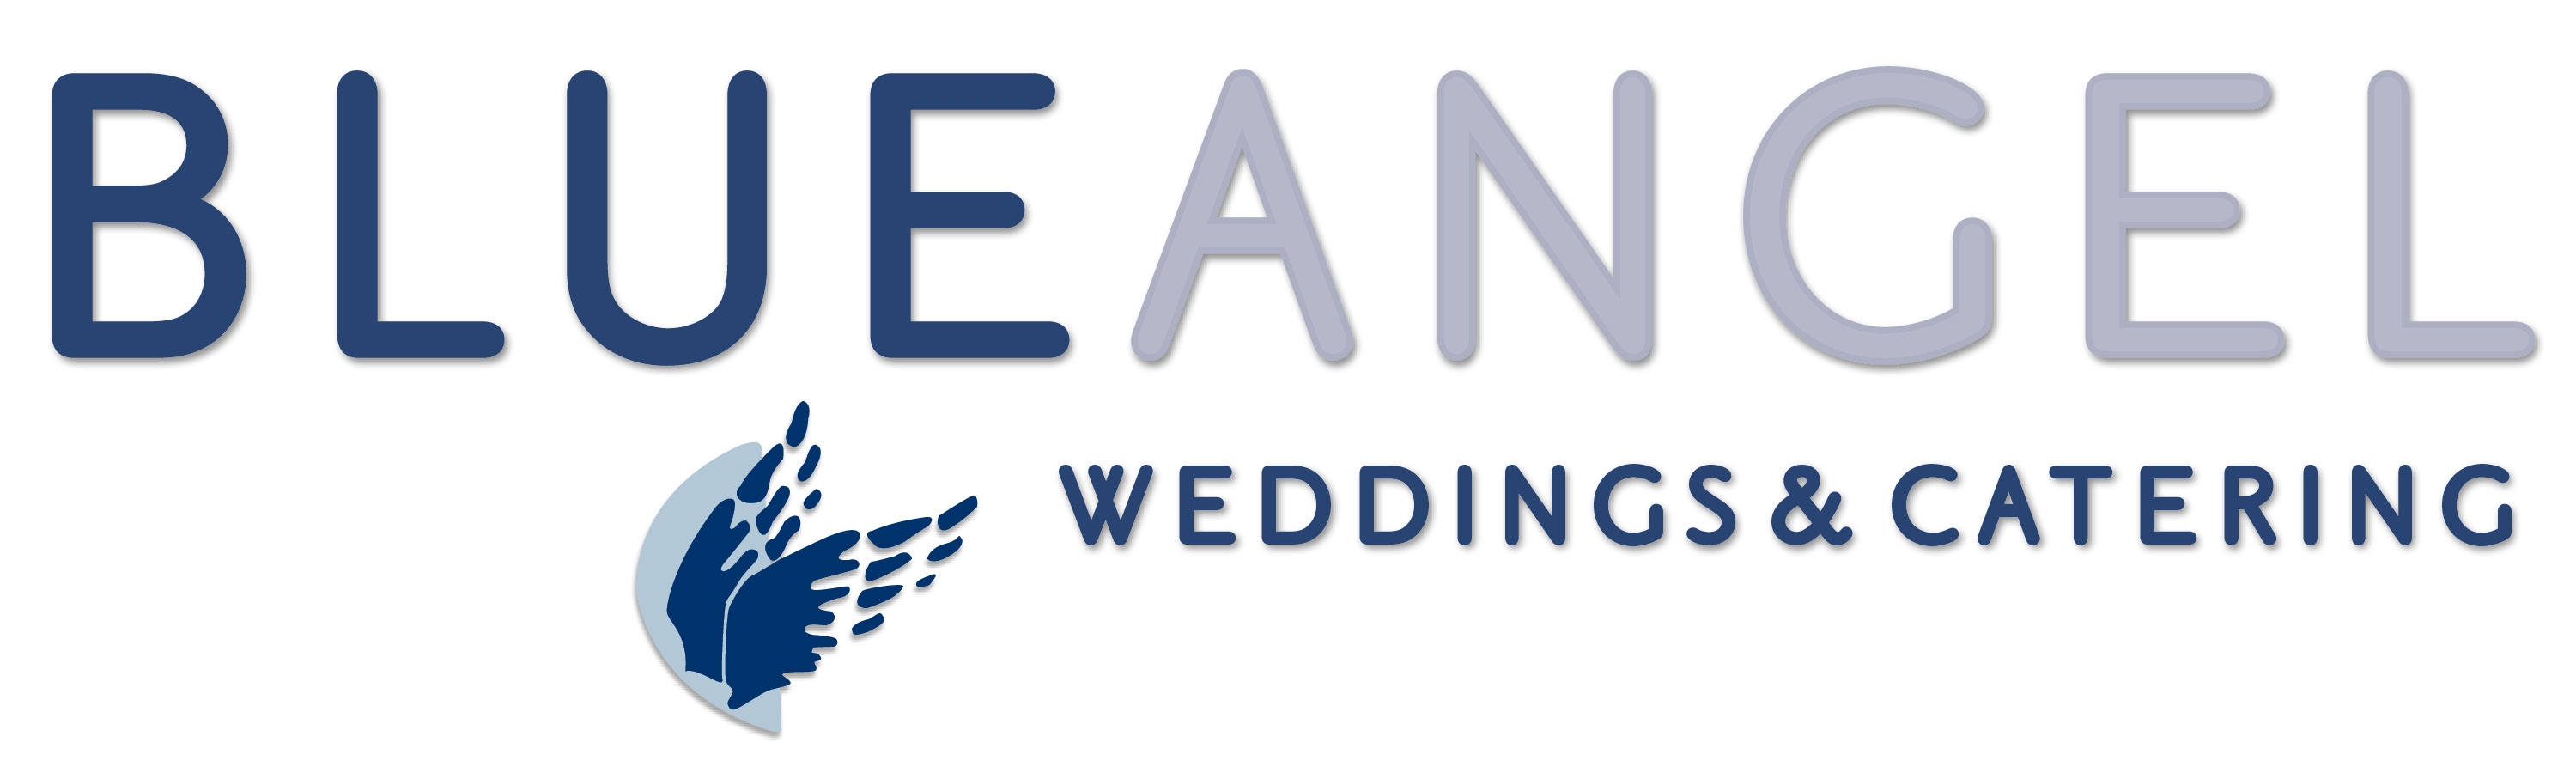 blueAngel-WeddingCatering-logo1 High Resolution